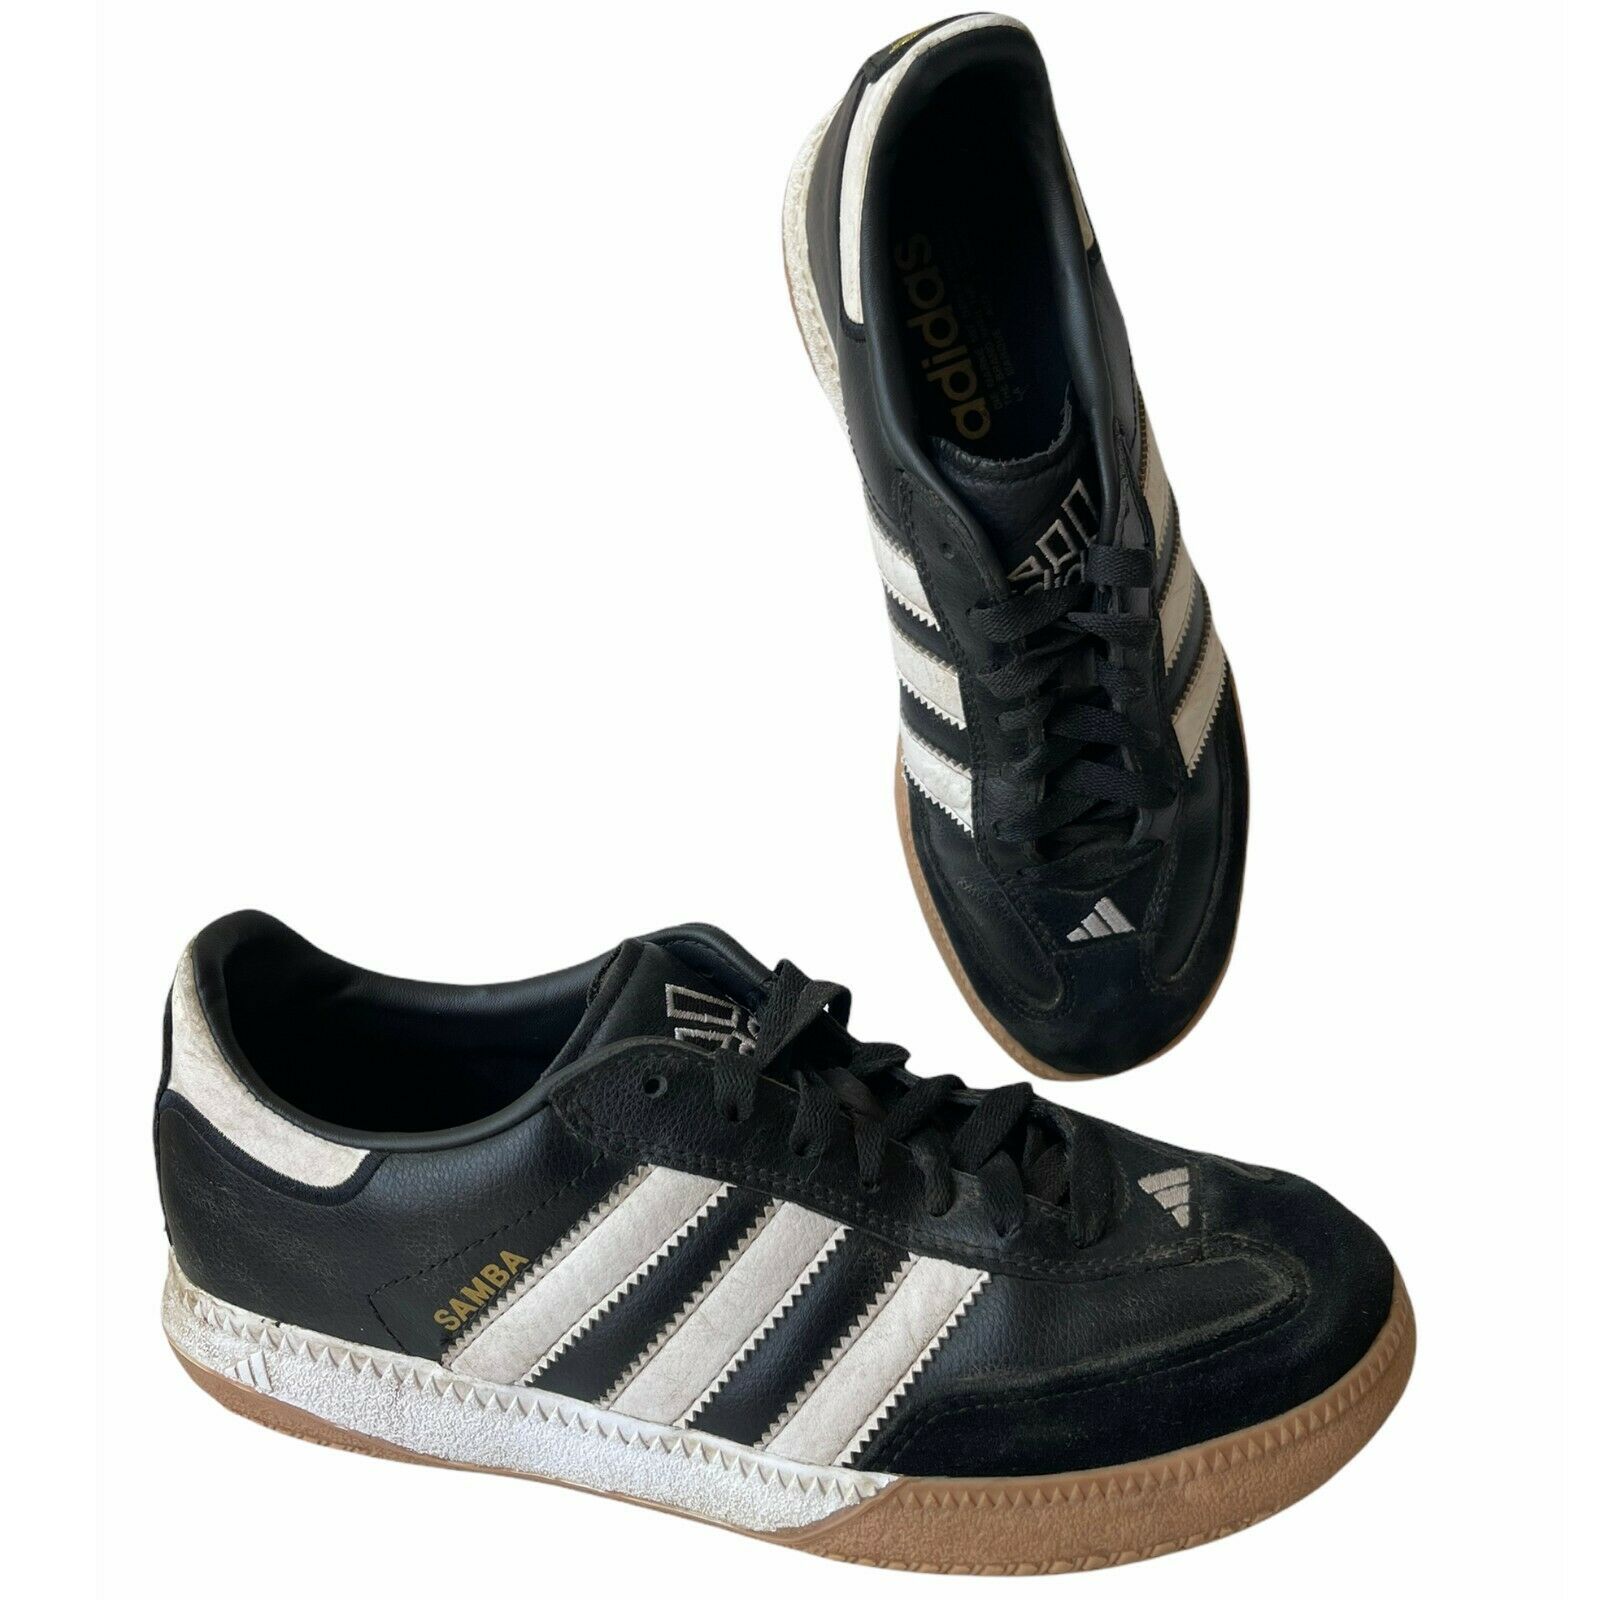 adidas Samba 660427 Indoor Leather Soccer Shoes Big Boys size 5.5 Black